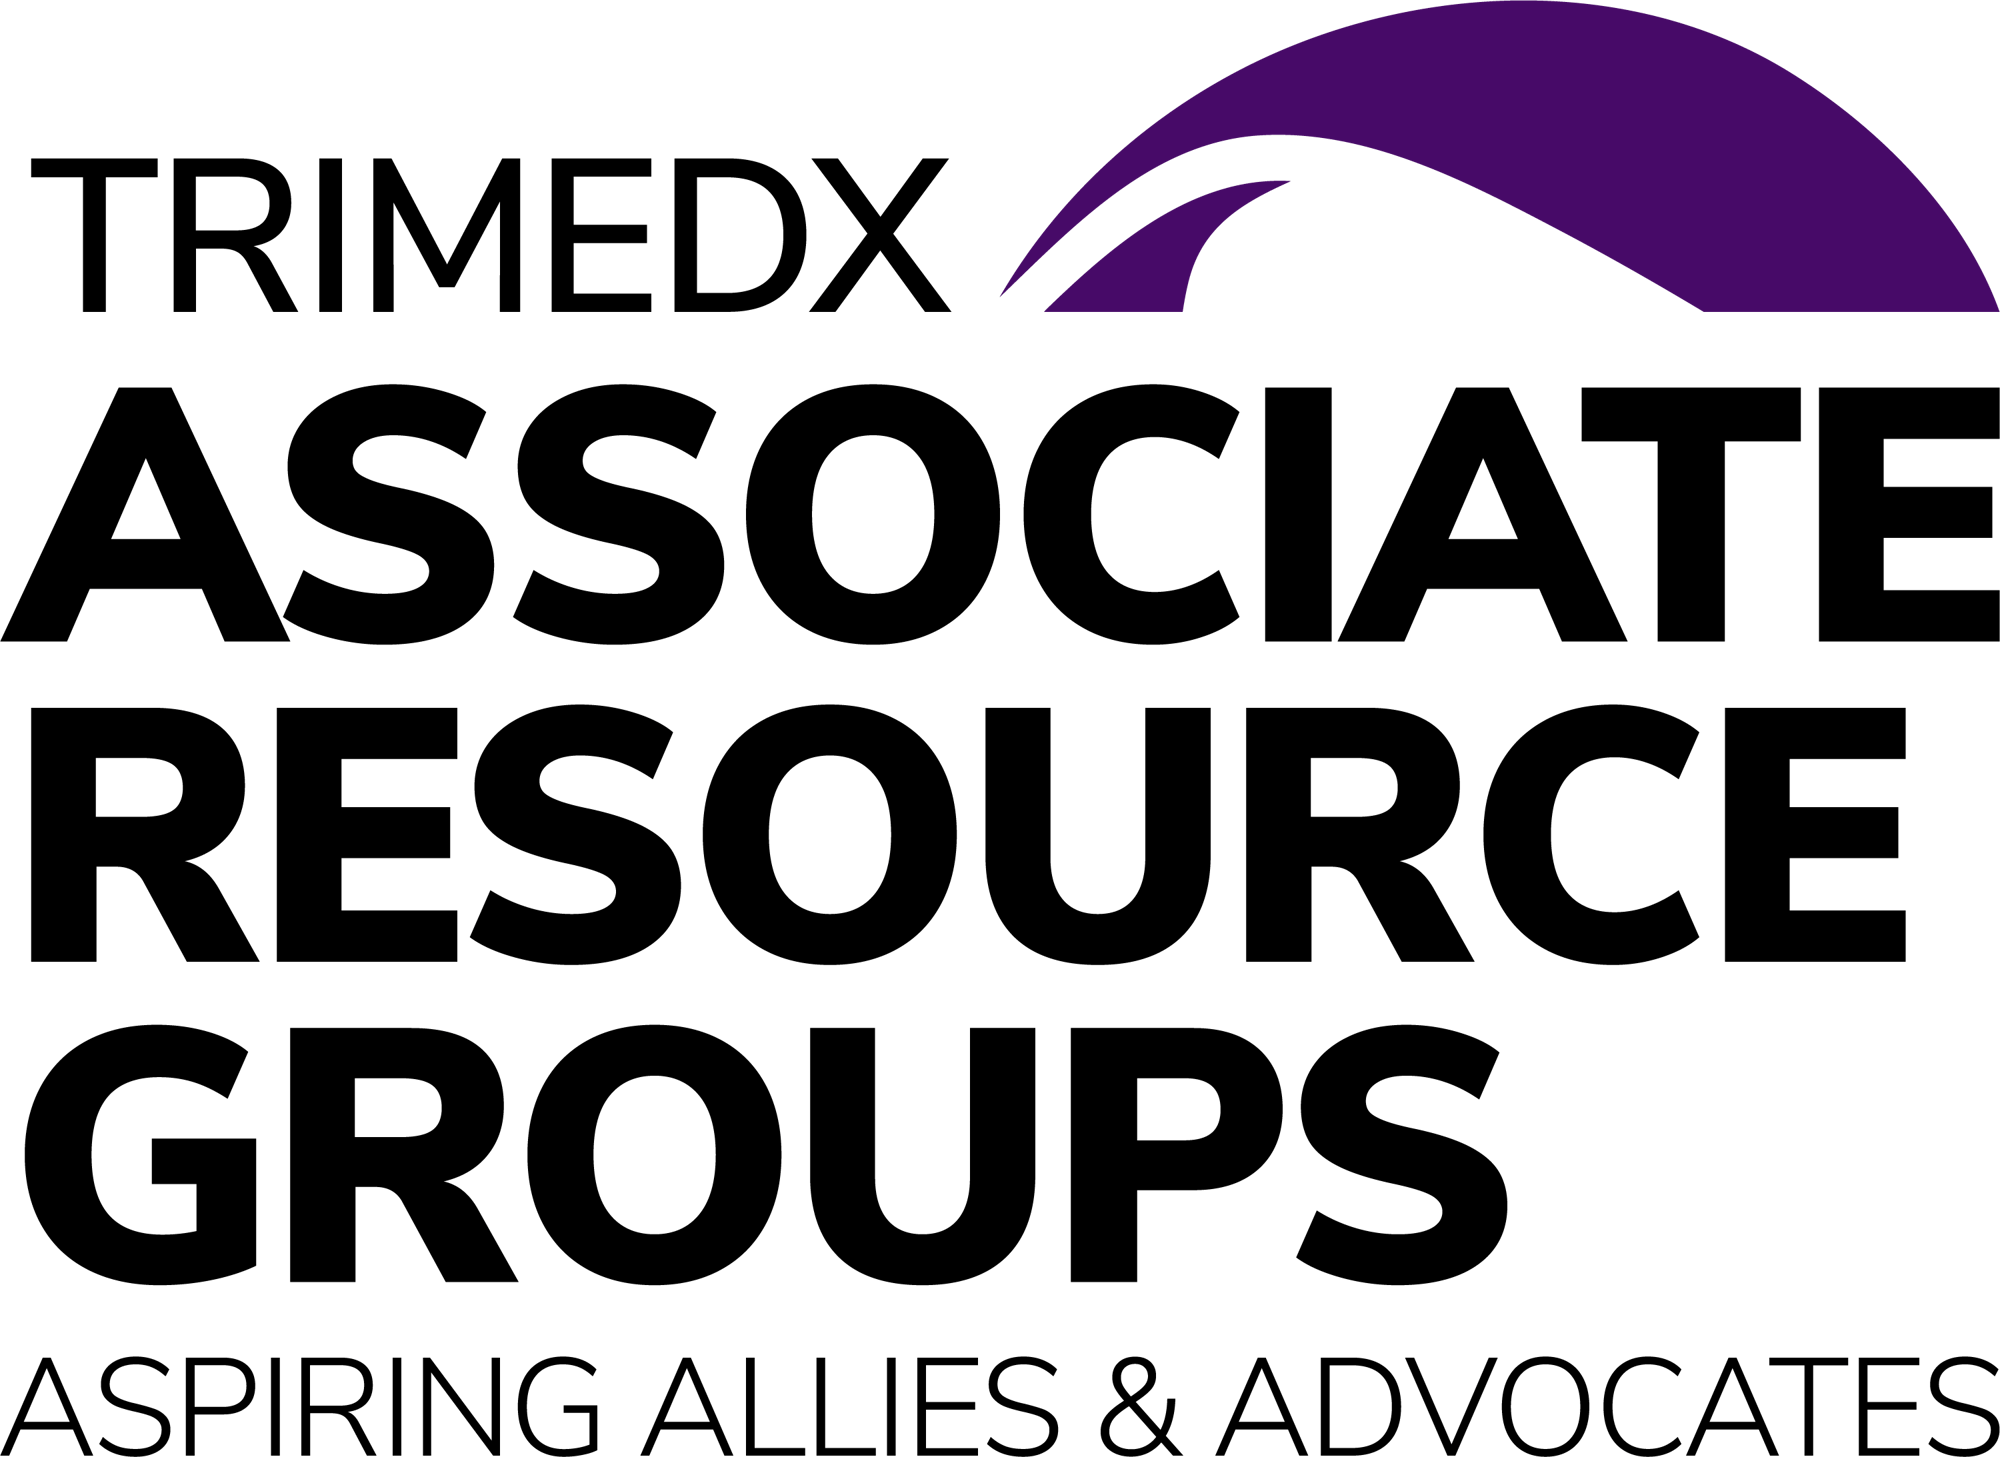 TRIMEDX Associate Resource Groups